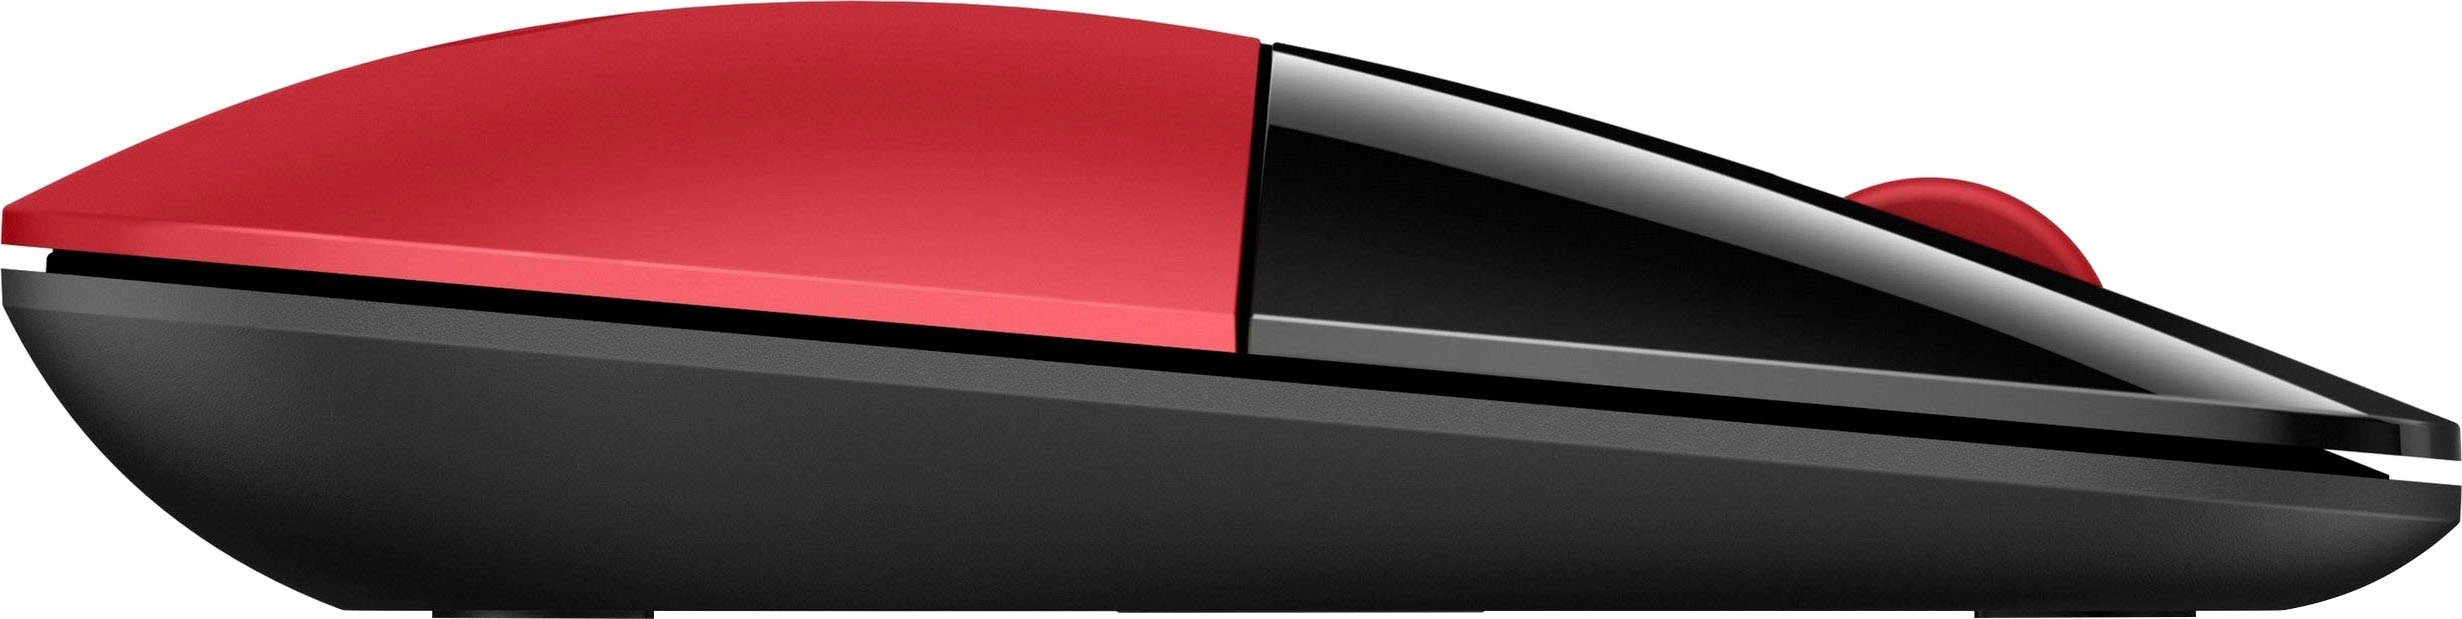 HP Z3700 Maus schwarz/rot